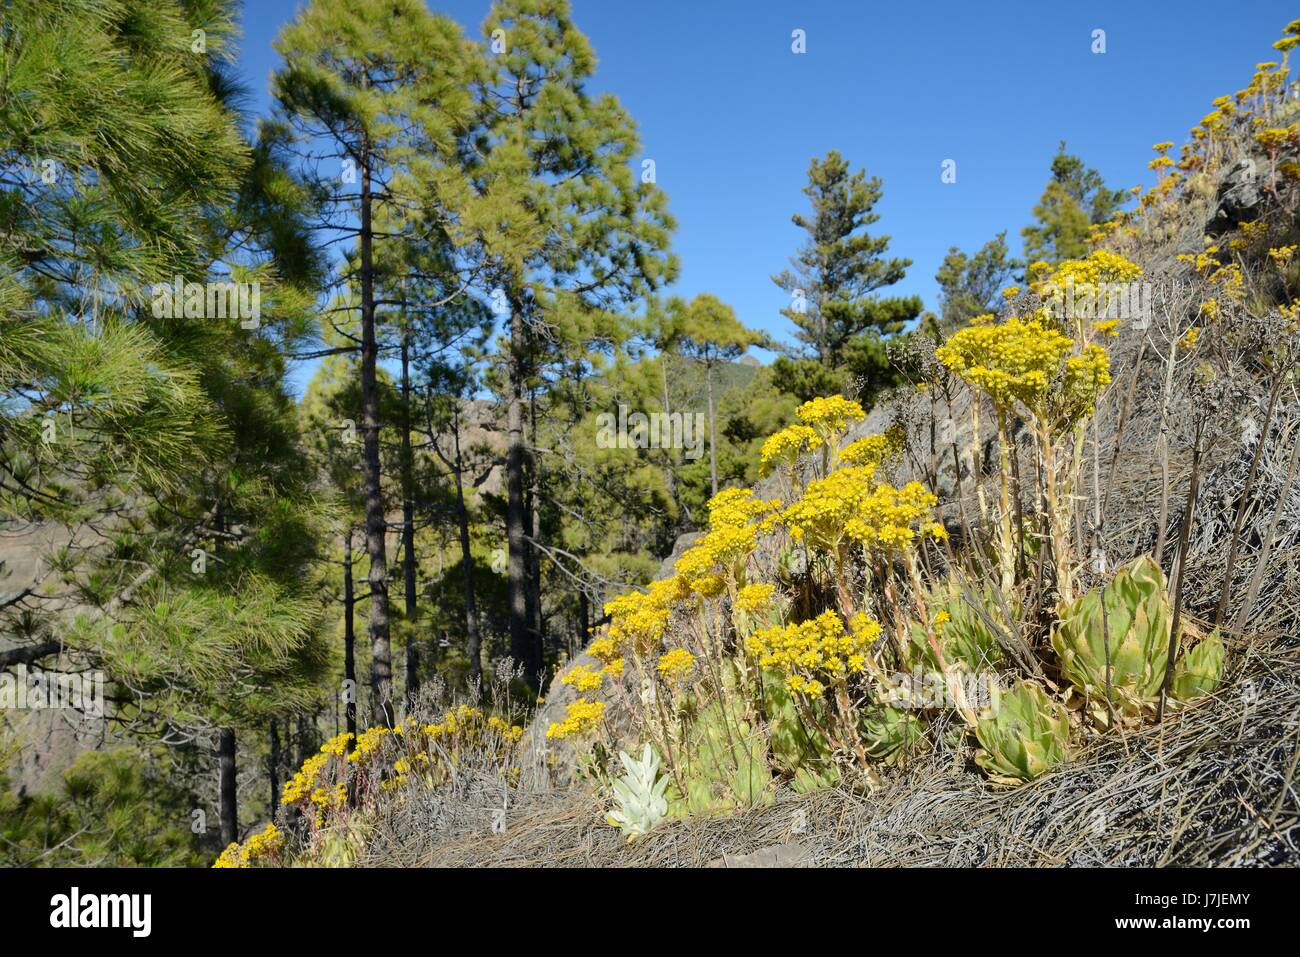 Endemic Aeonium / Tree houseleek (Aeonium simsii) flowering on mountain slope near a stand of Canary Island Pines (Pinus canariensis), Gran Canaria. Stock Photo